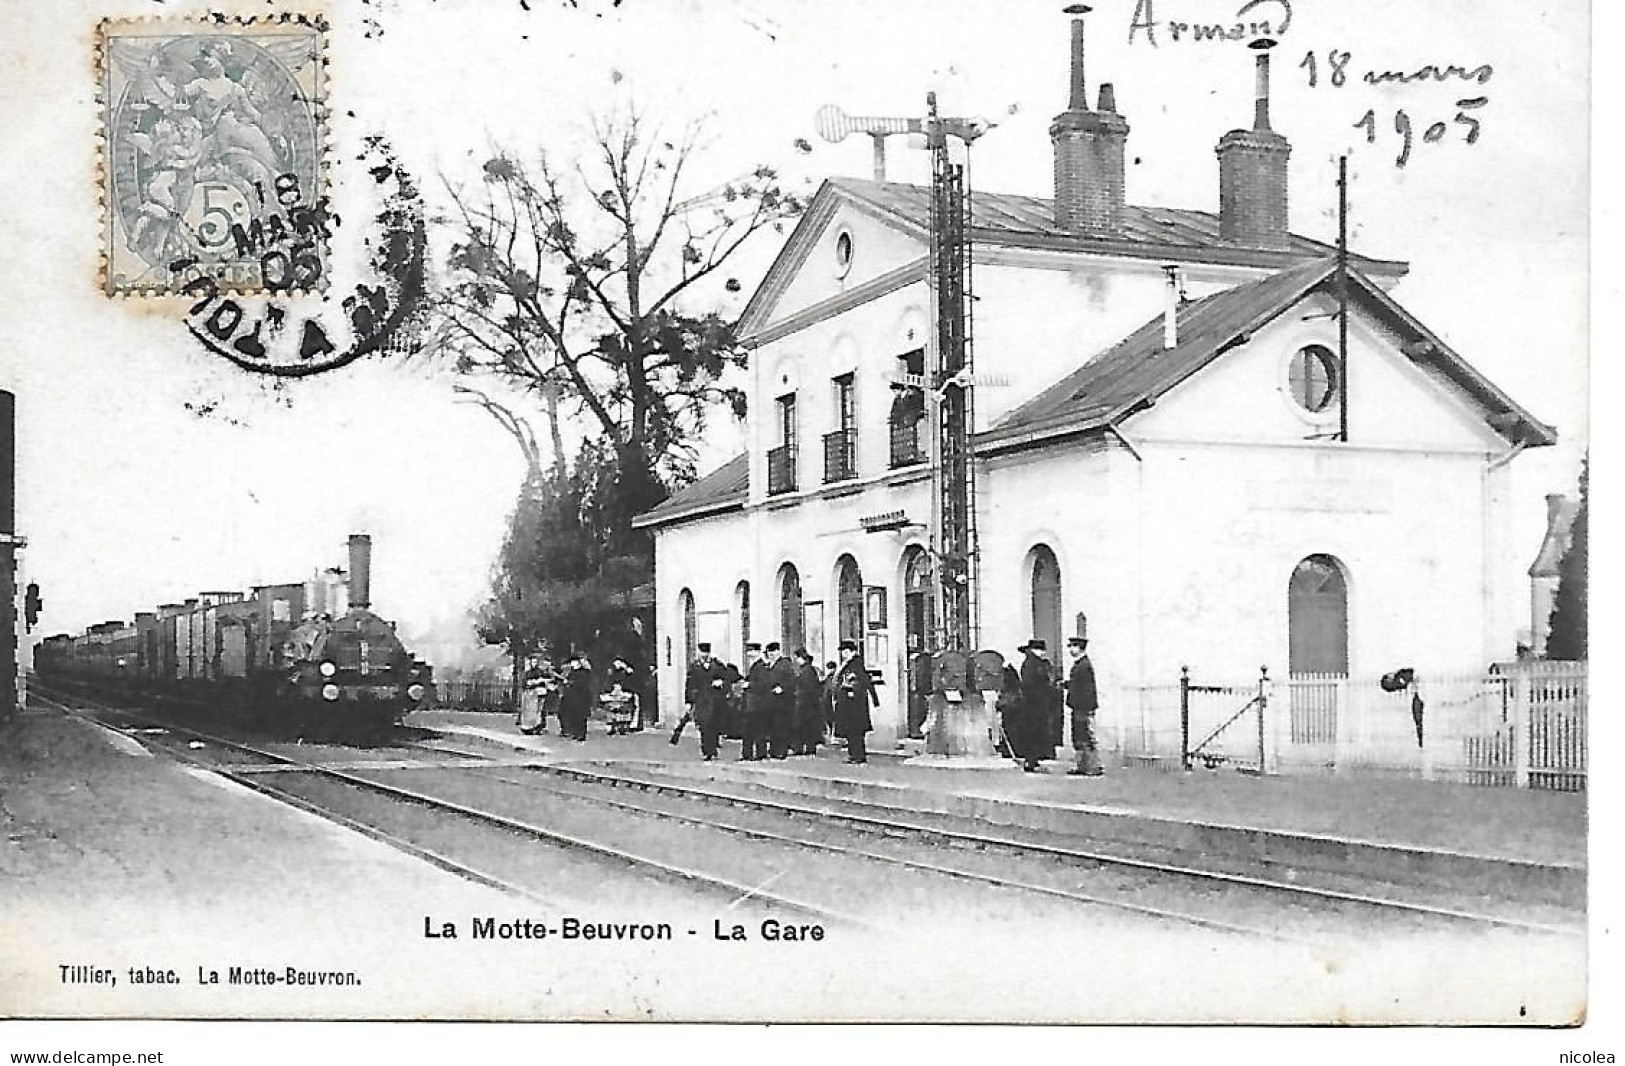 41 - LAMOTTE BEUVRON - LA GARE - ANIMATION ARRIVEE DU TRAIN - CPA 1905 - EDIT.TILLIER TABAC BON ETAT - Lamotte Beuvron